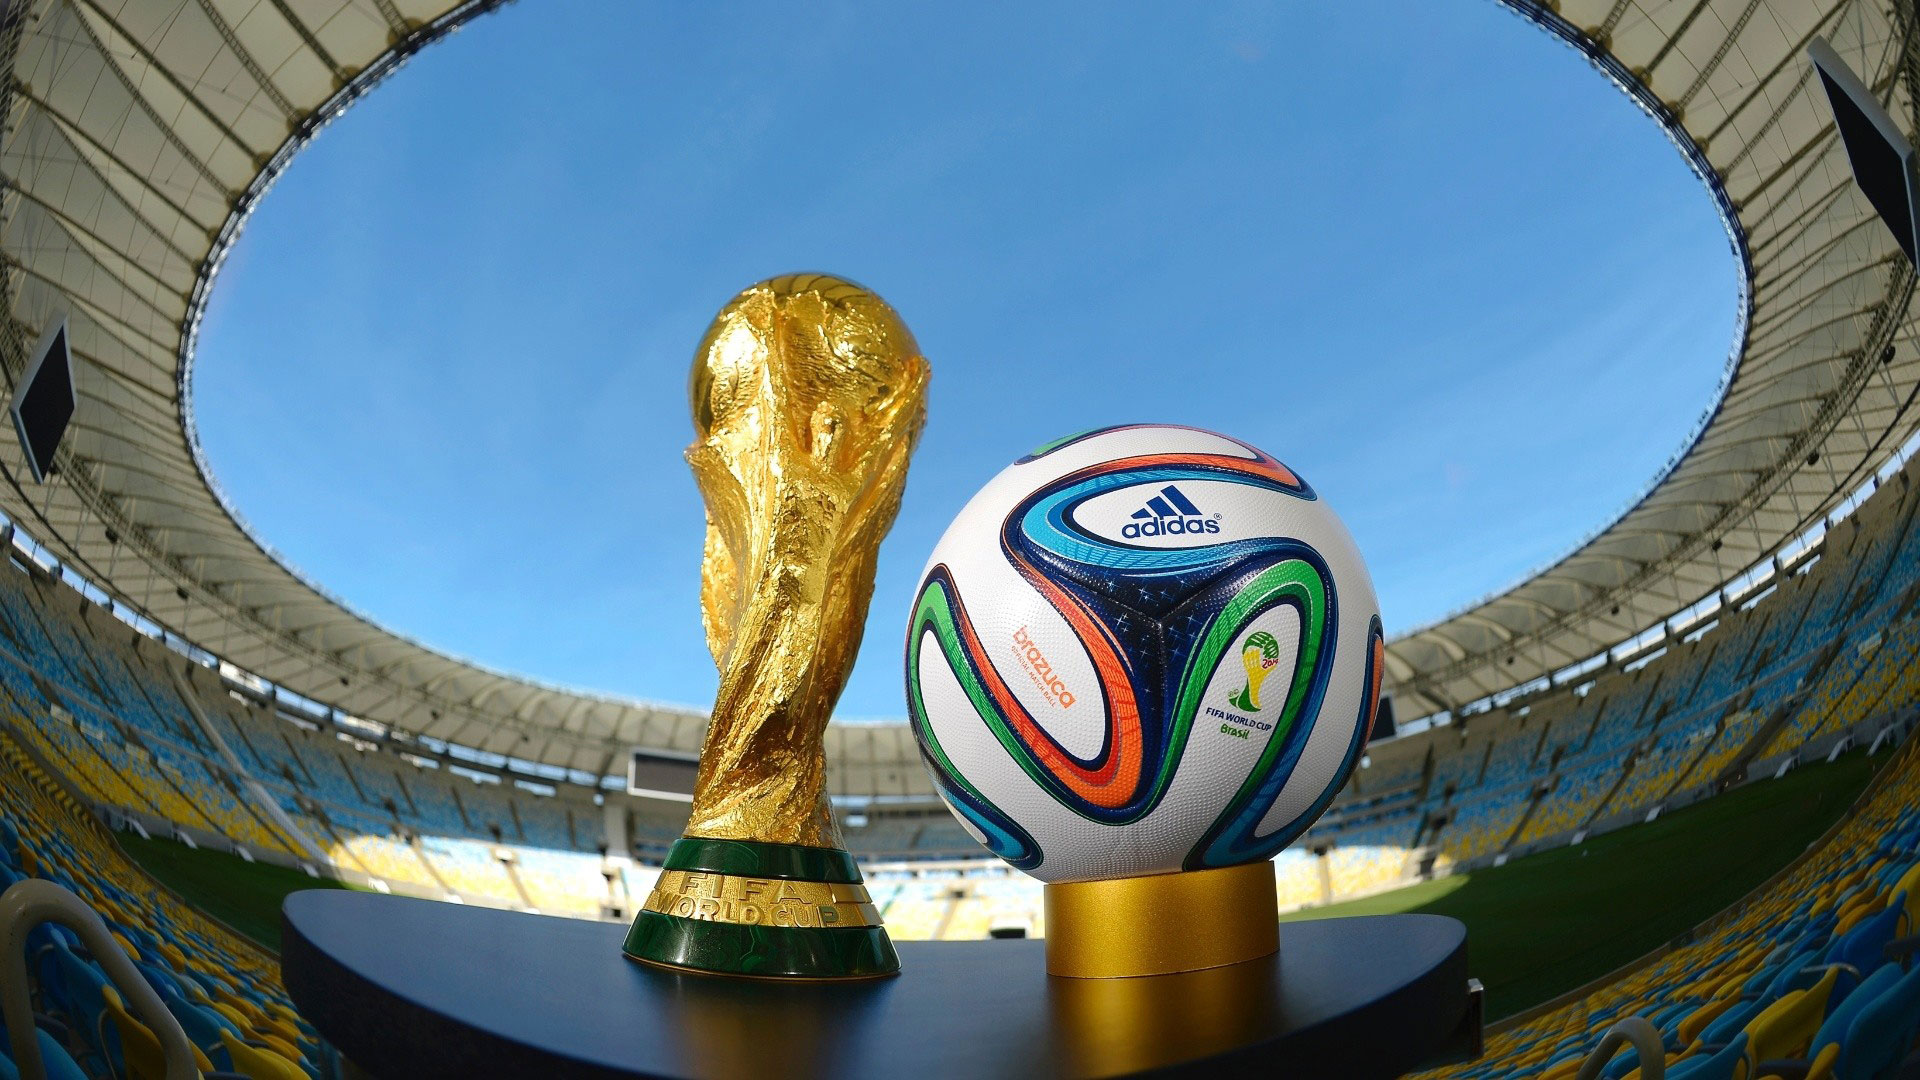 Fifa World Cup Brazil HD Desktop iPad iPhone Wallpaper